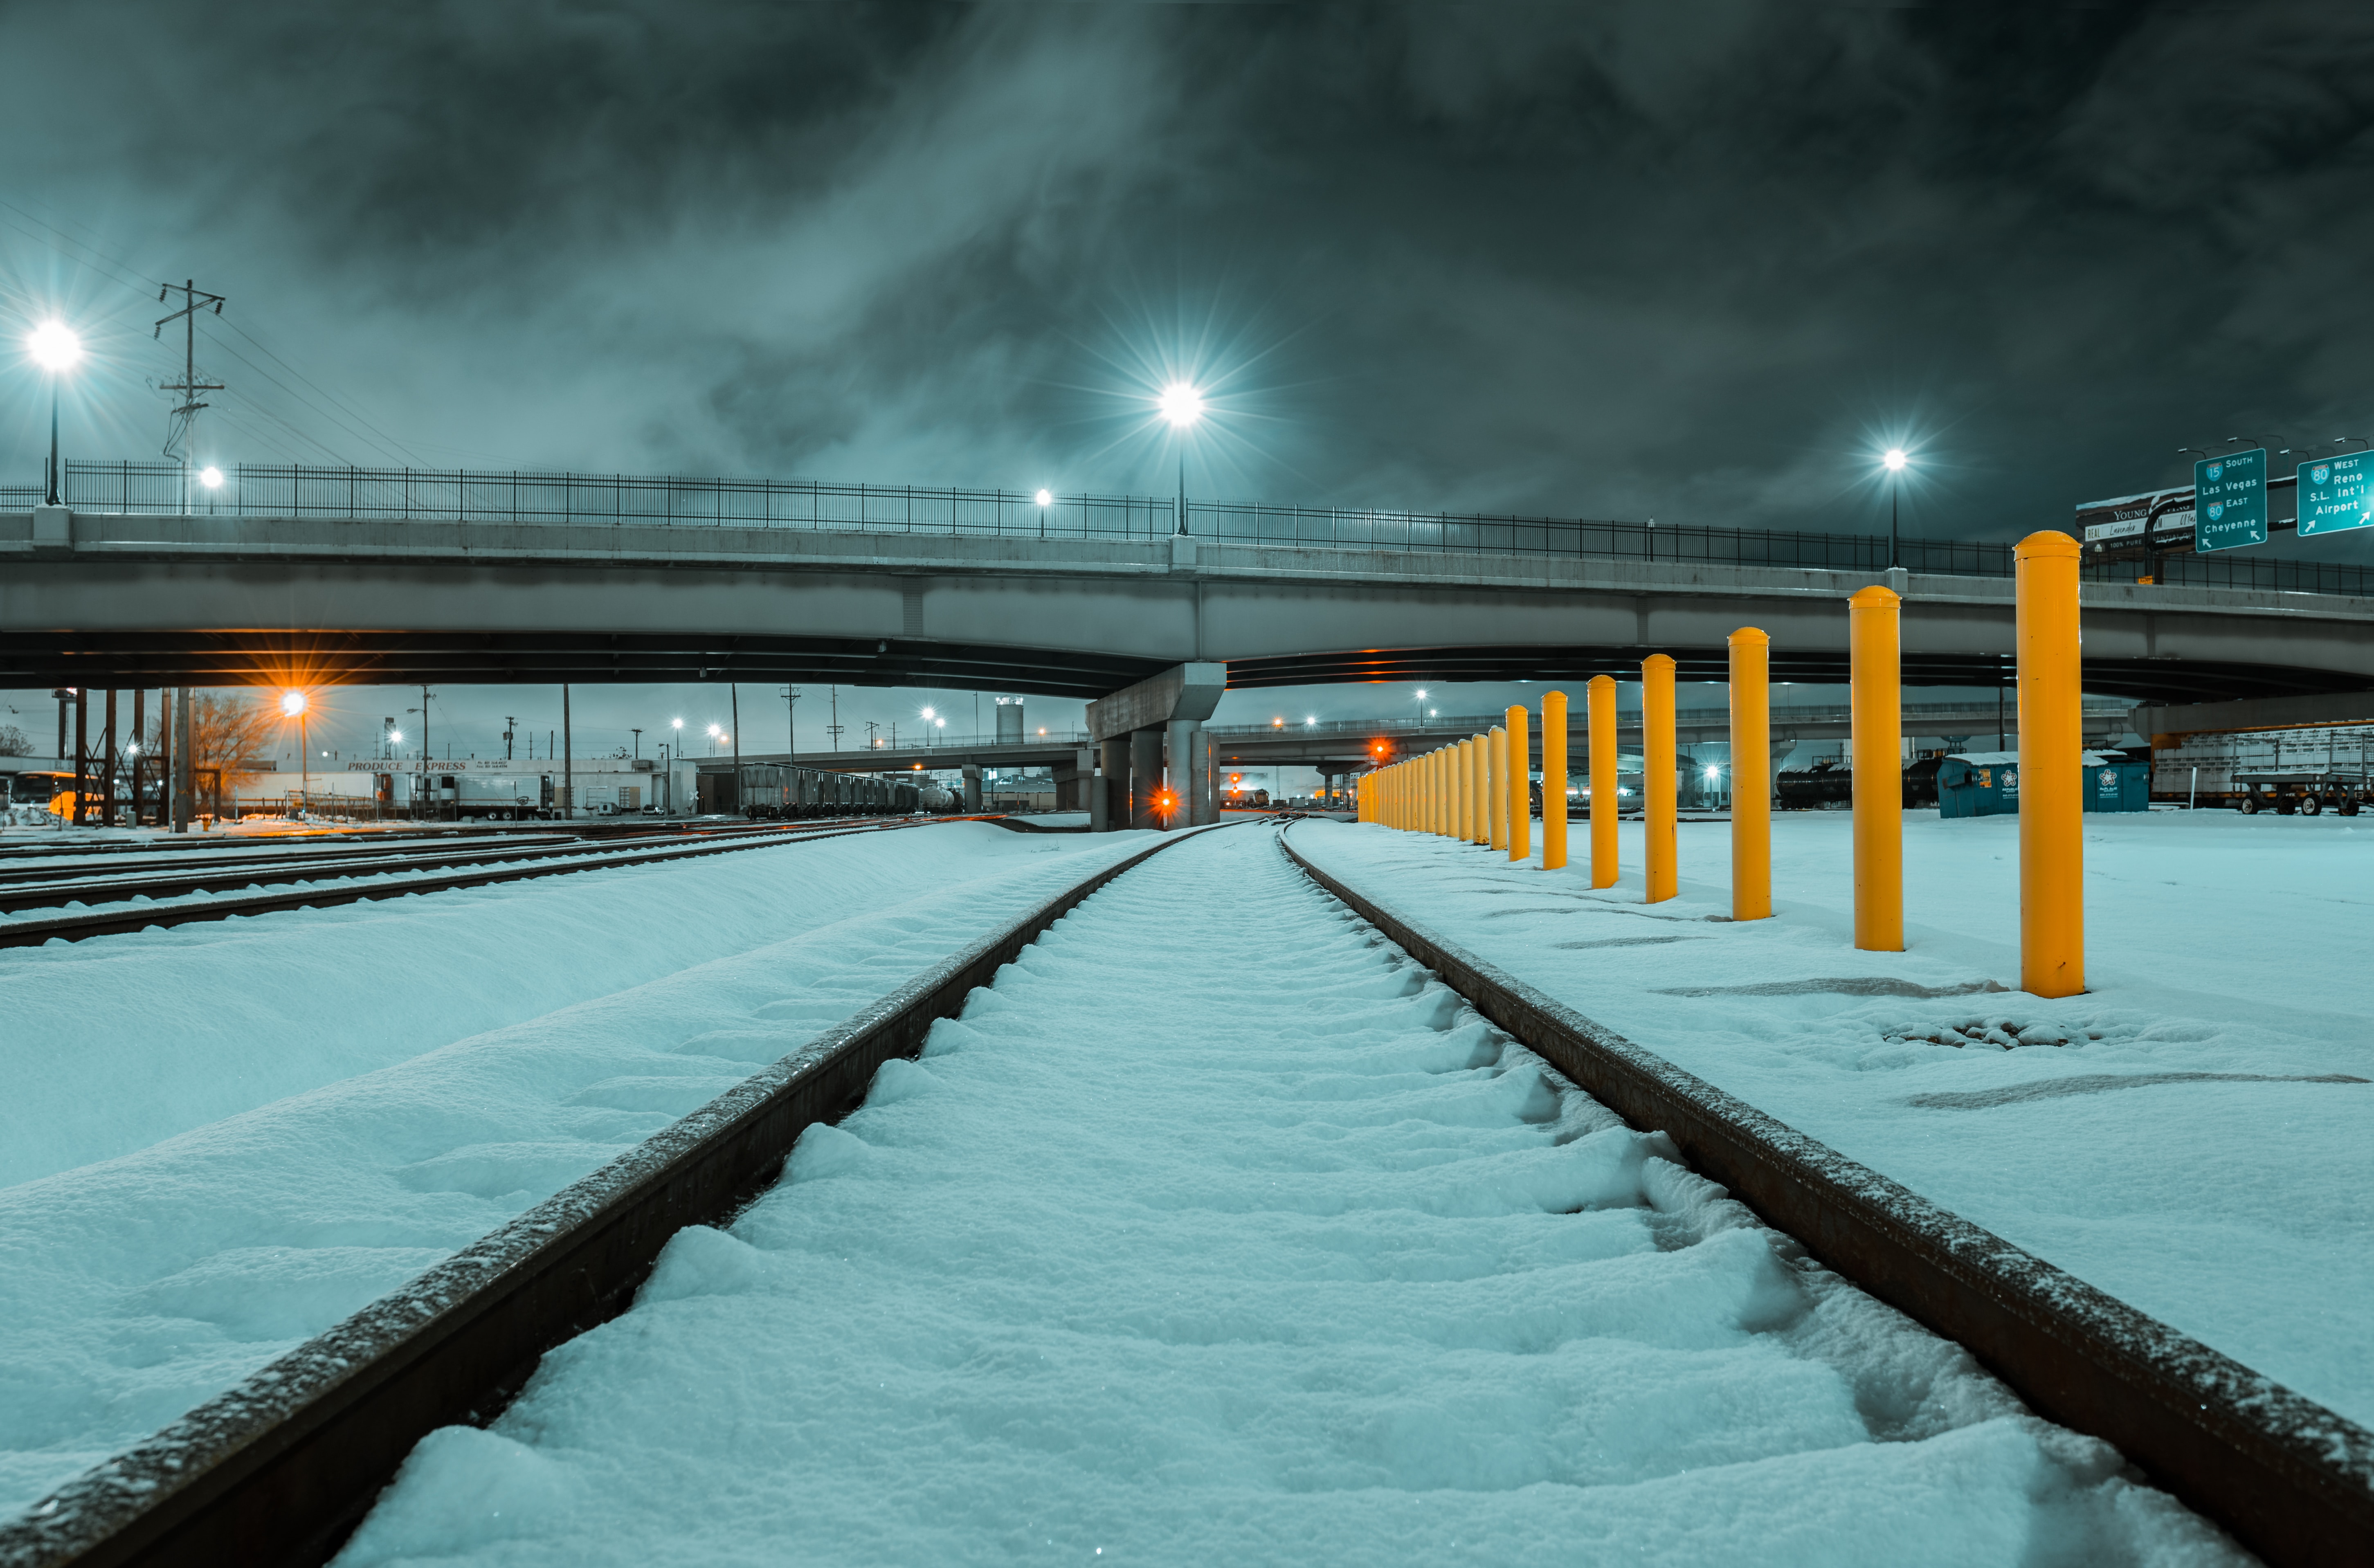 snow, railway, winter, miscellanea, miscellaneous, bridge, rails